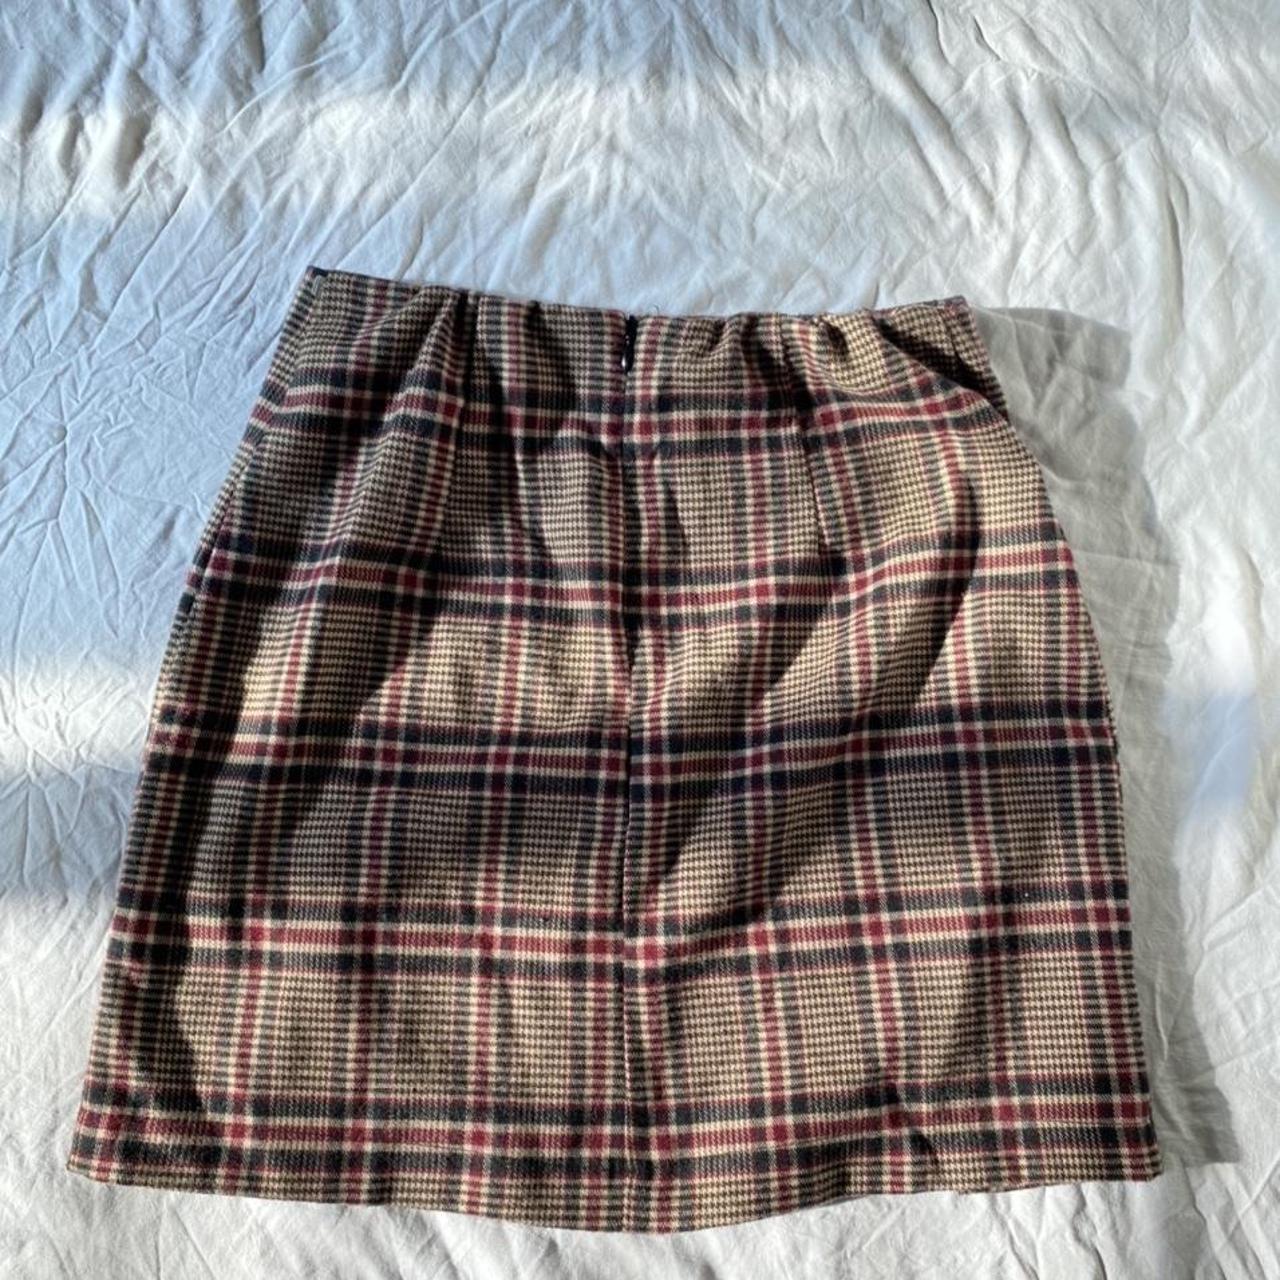 cutest tan plaid mini skirt soft stretchy material - Depop